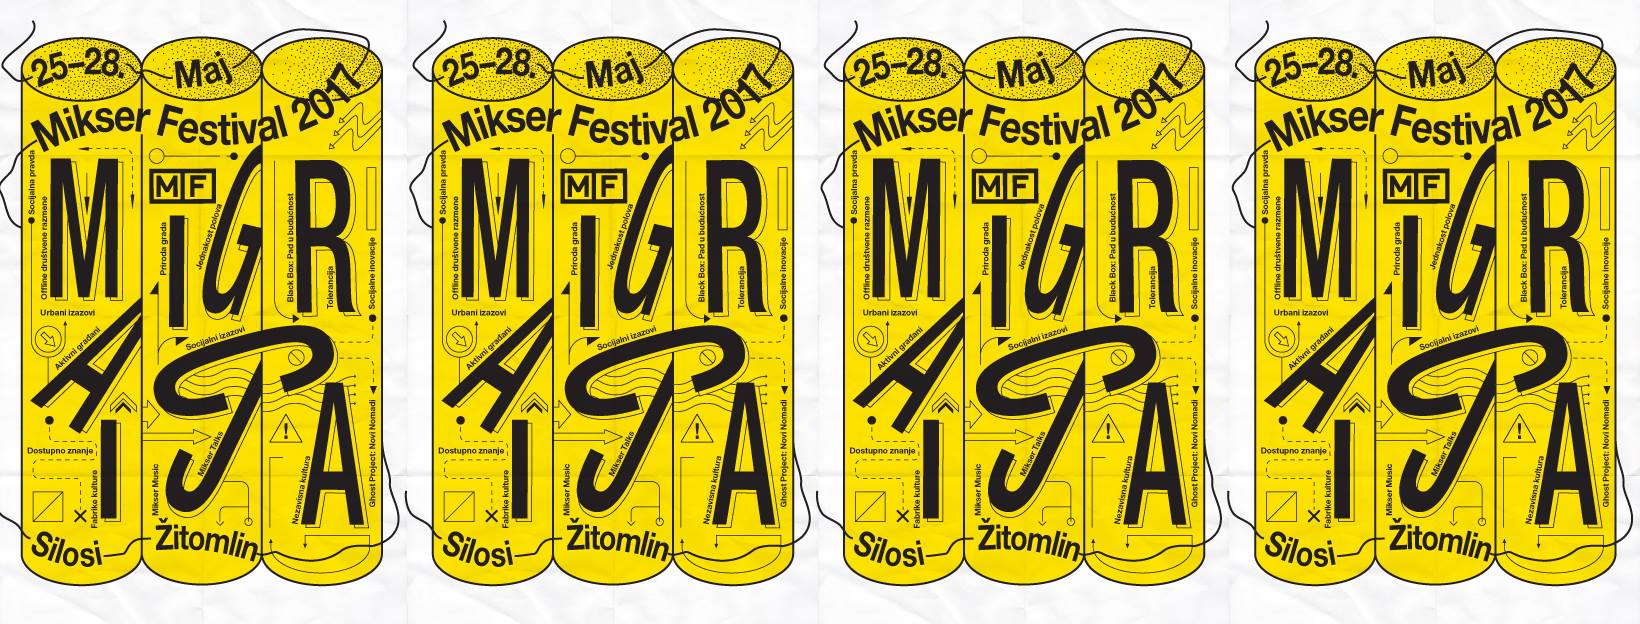 Mikser festival 2017, Beograd, 25-28.05.2017